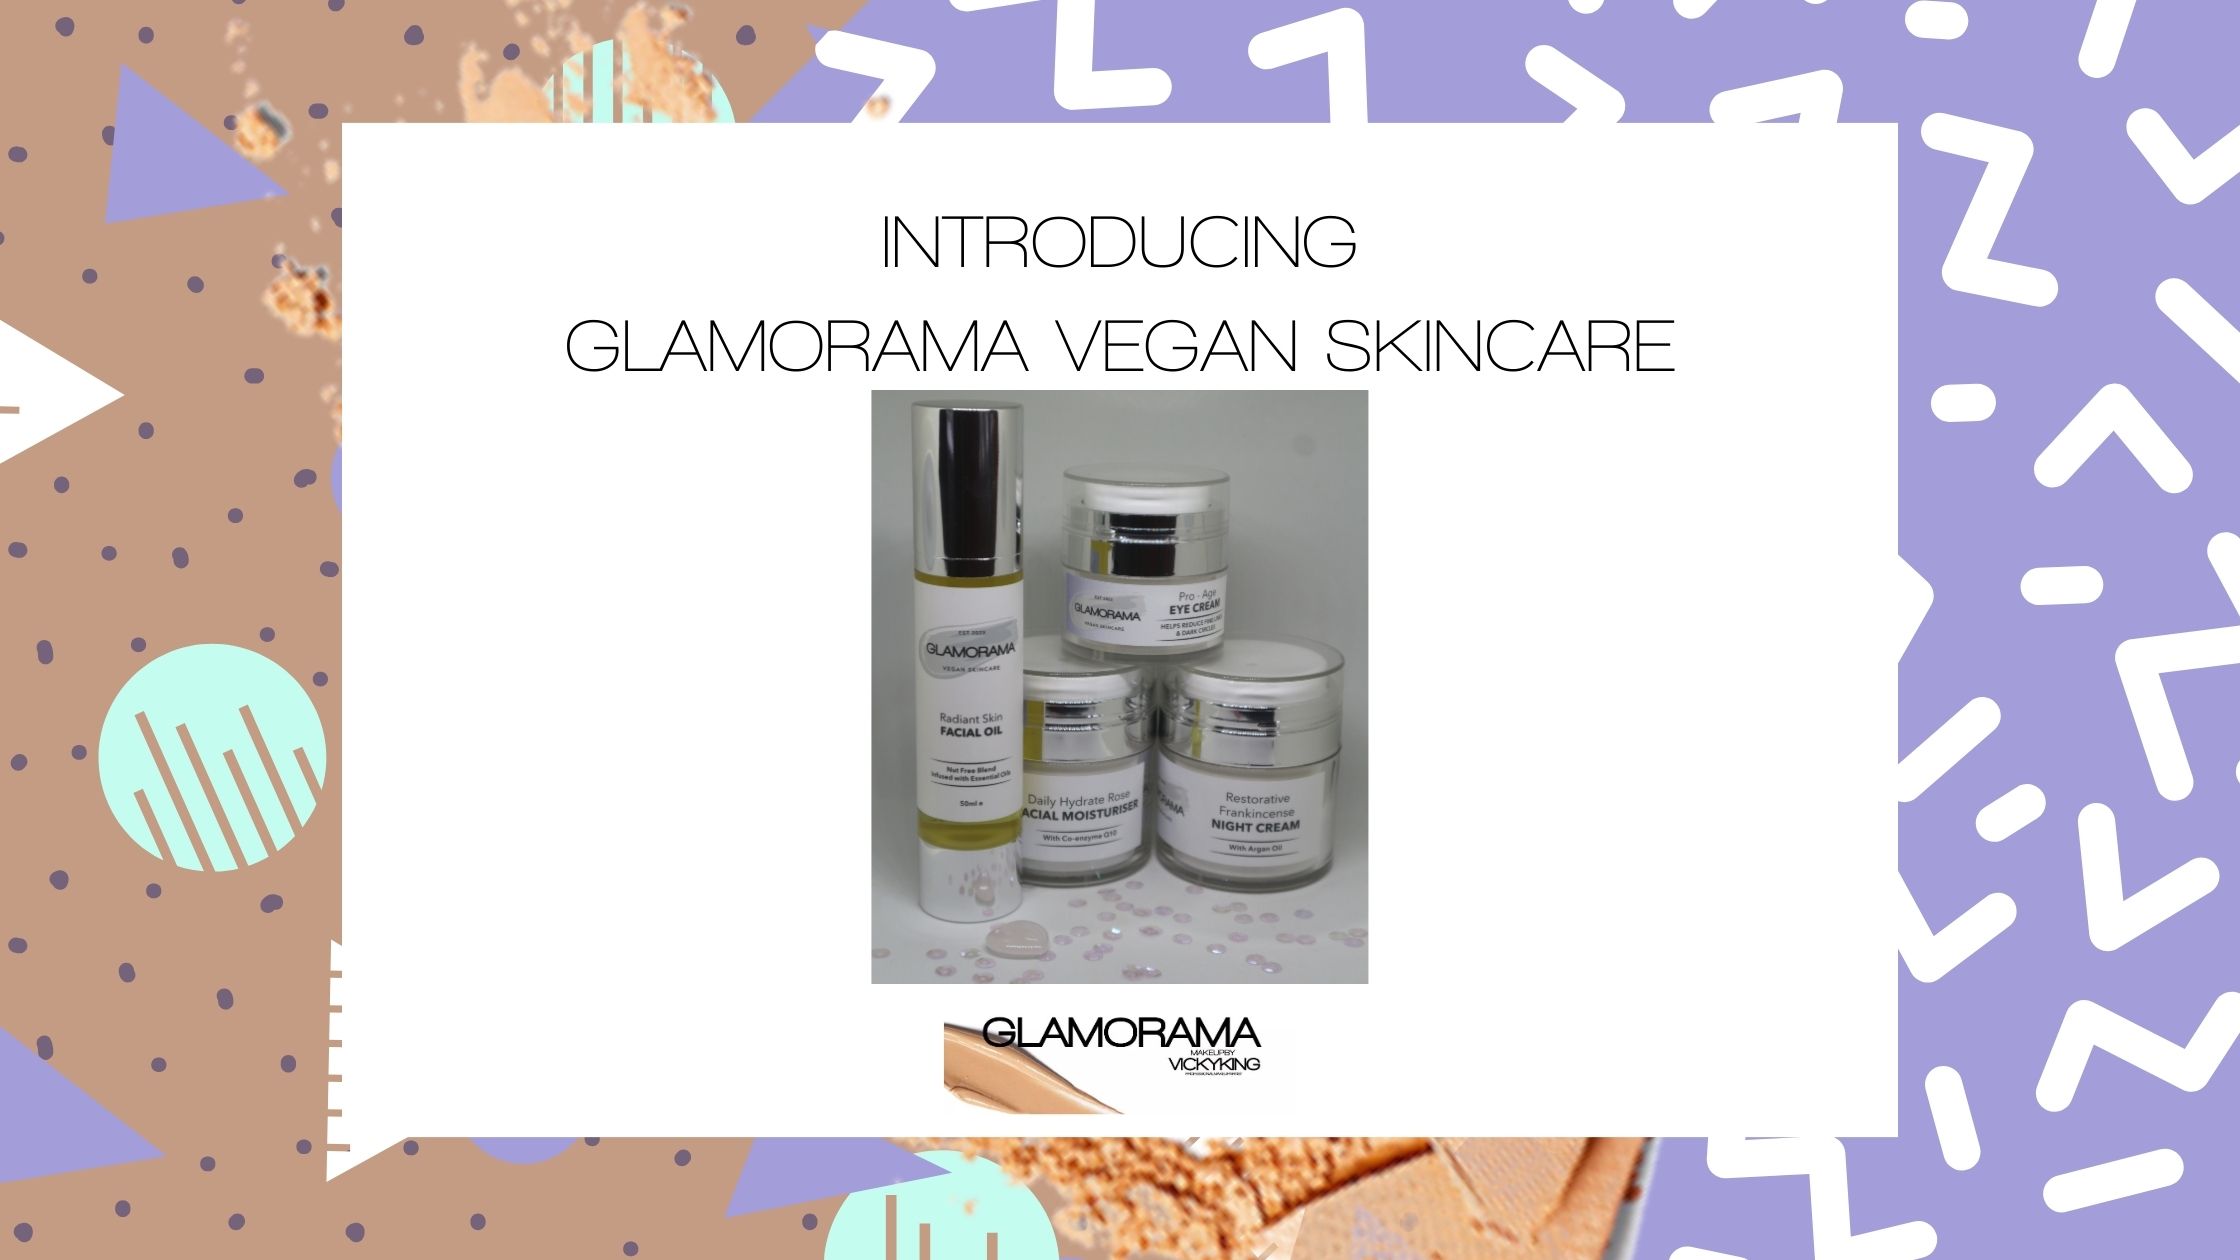 Glamorama Vegan Skincare